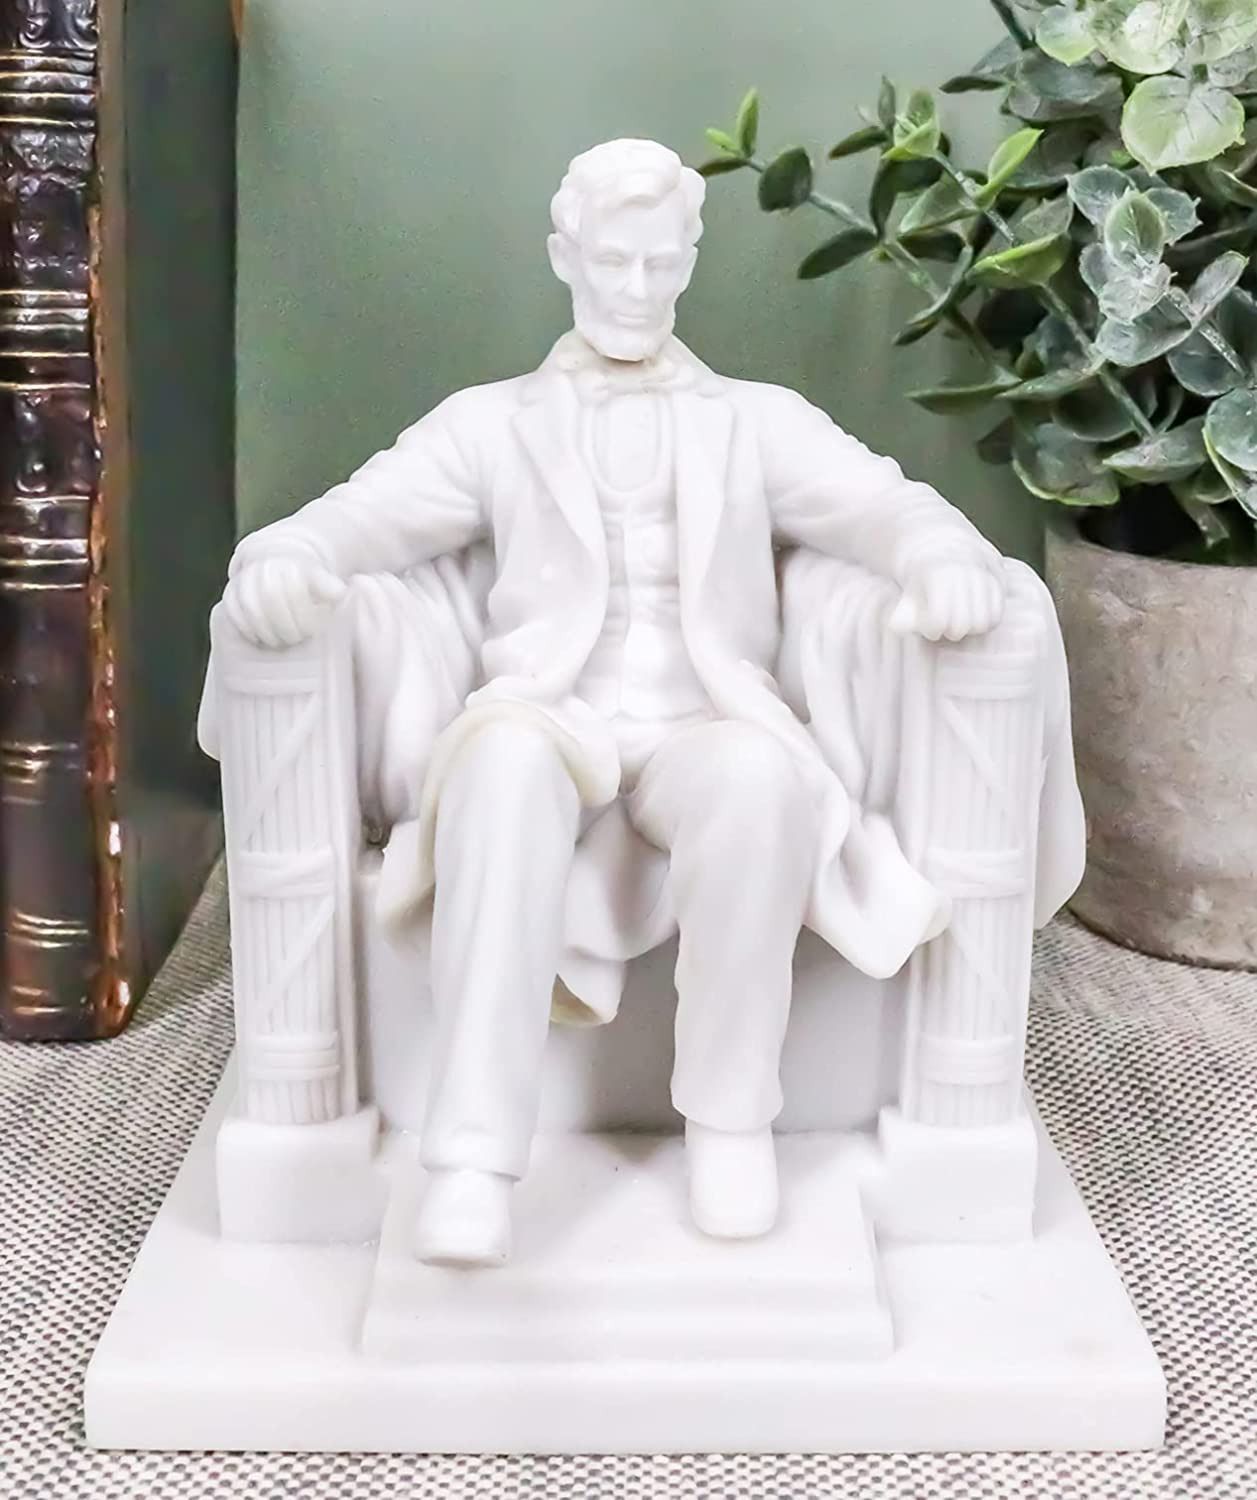 Ebros Small Seated Abraham Lincoln Figurine 5